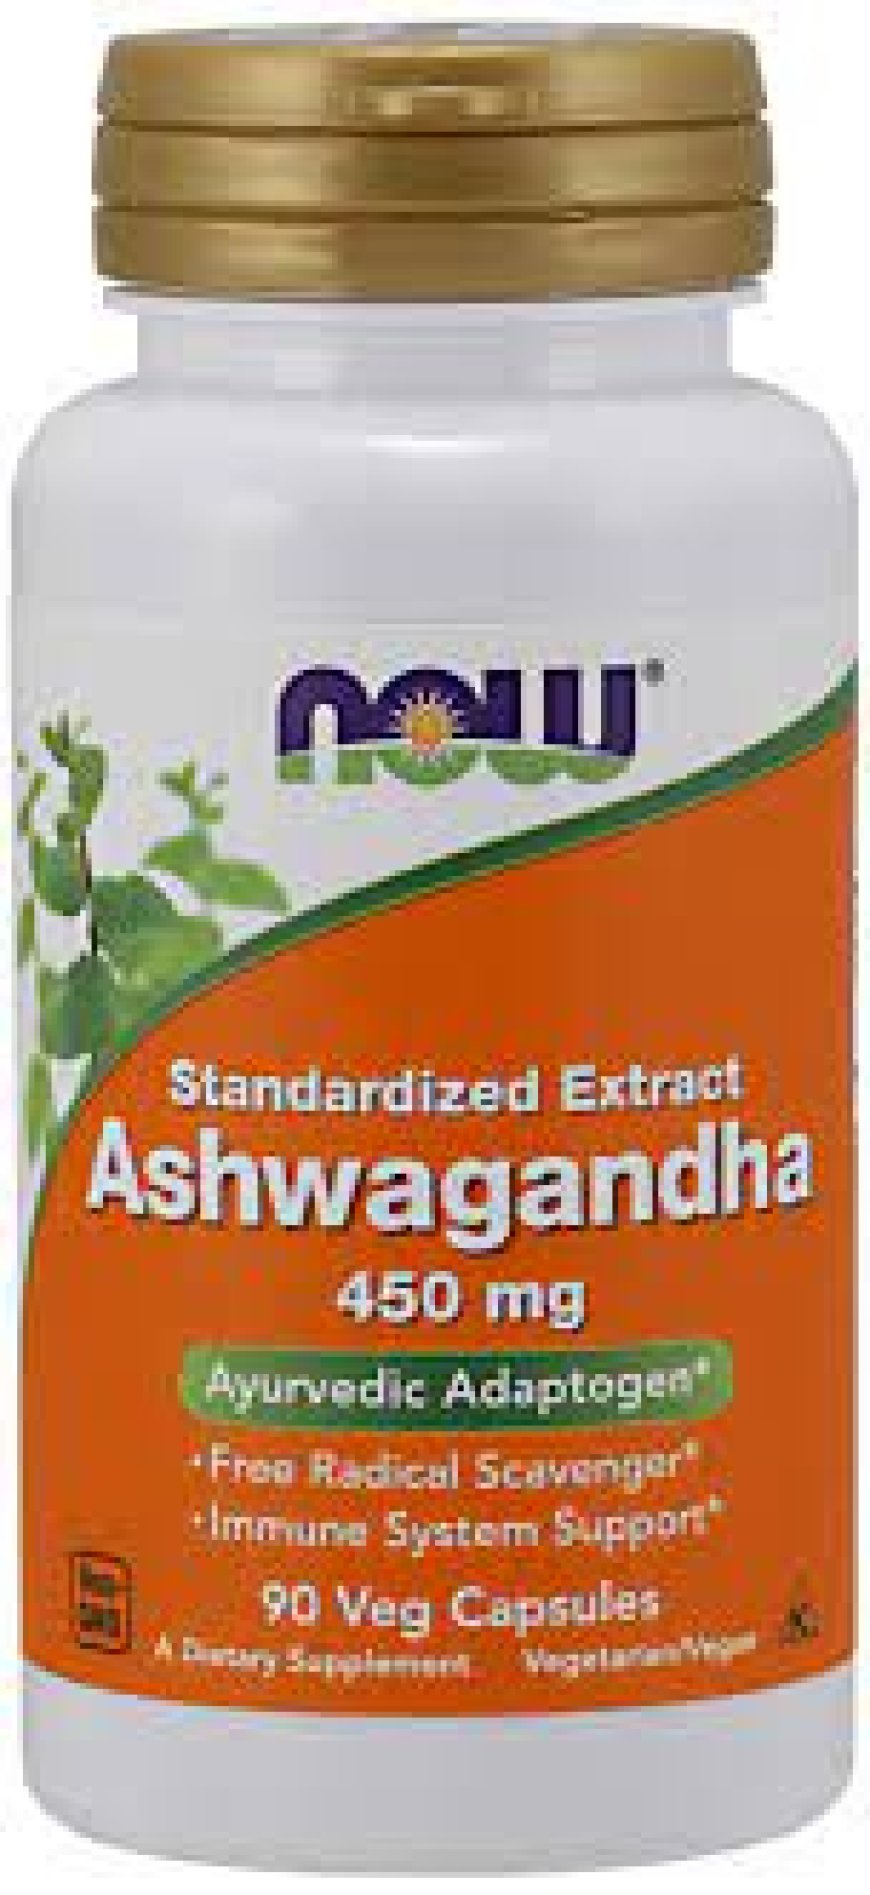 From Ayurvedic Medicine to Modern Science: Health Benefits of Ashwagandha